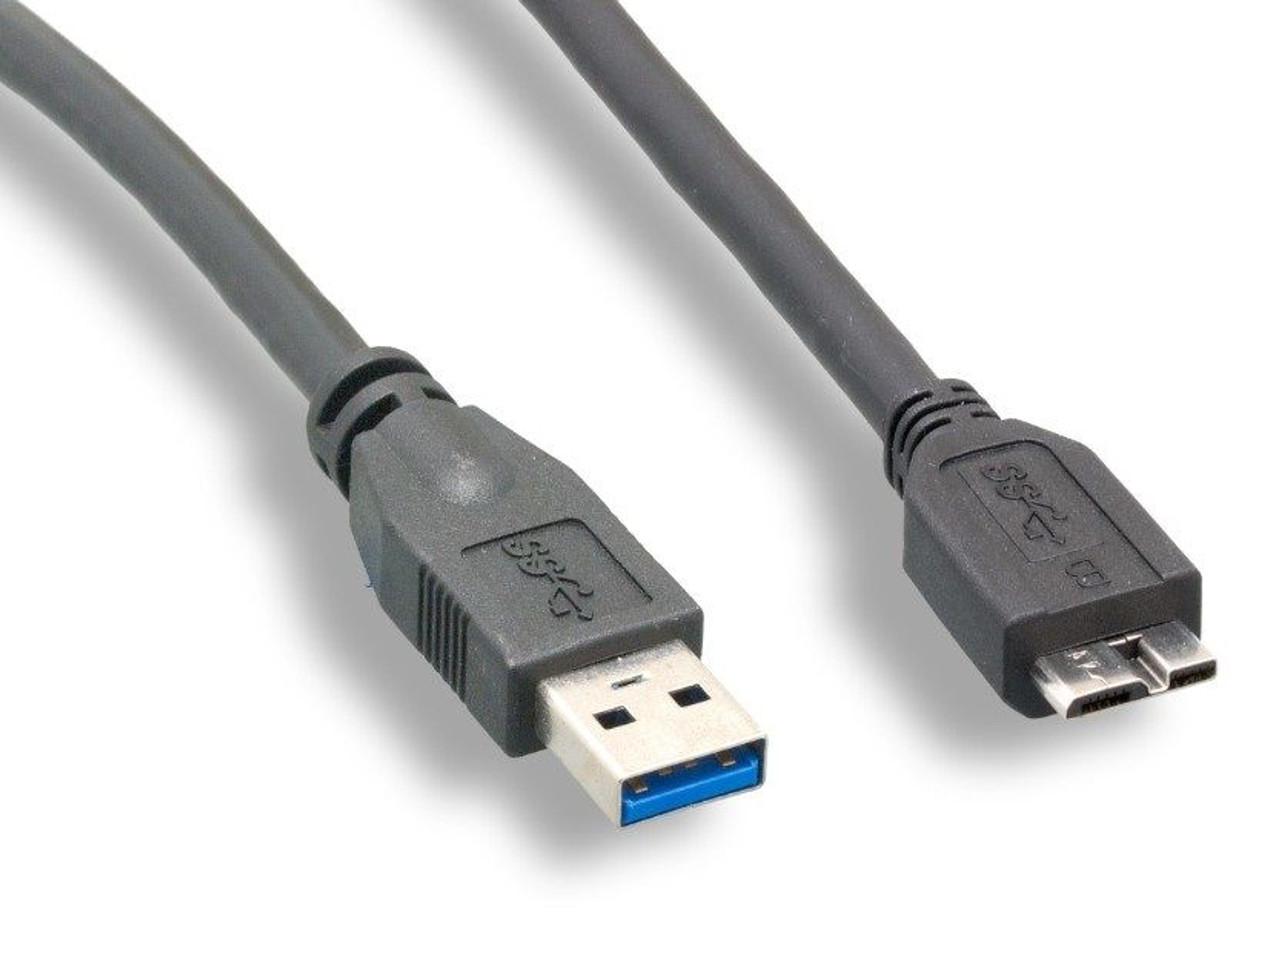 USB Adapter, Type A Male / Mini Din 6 Female